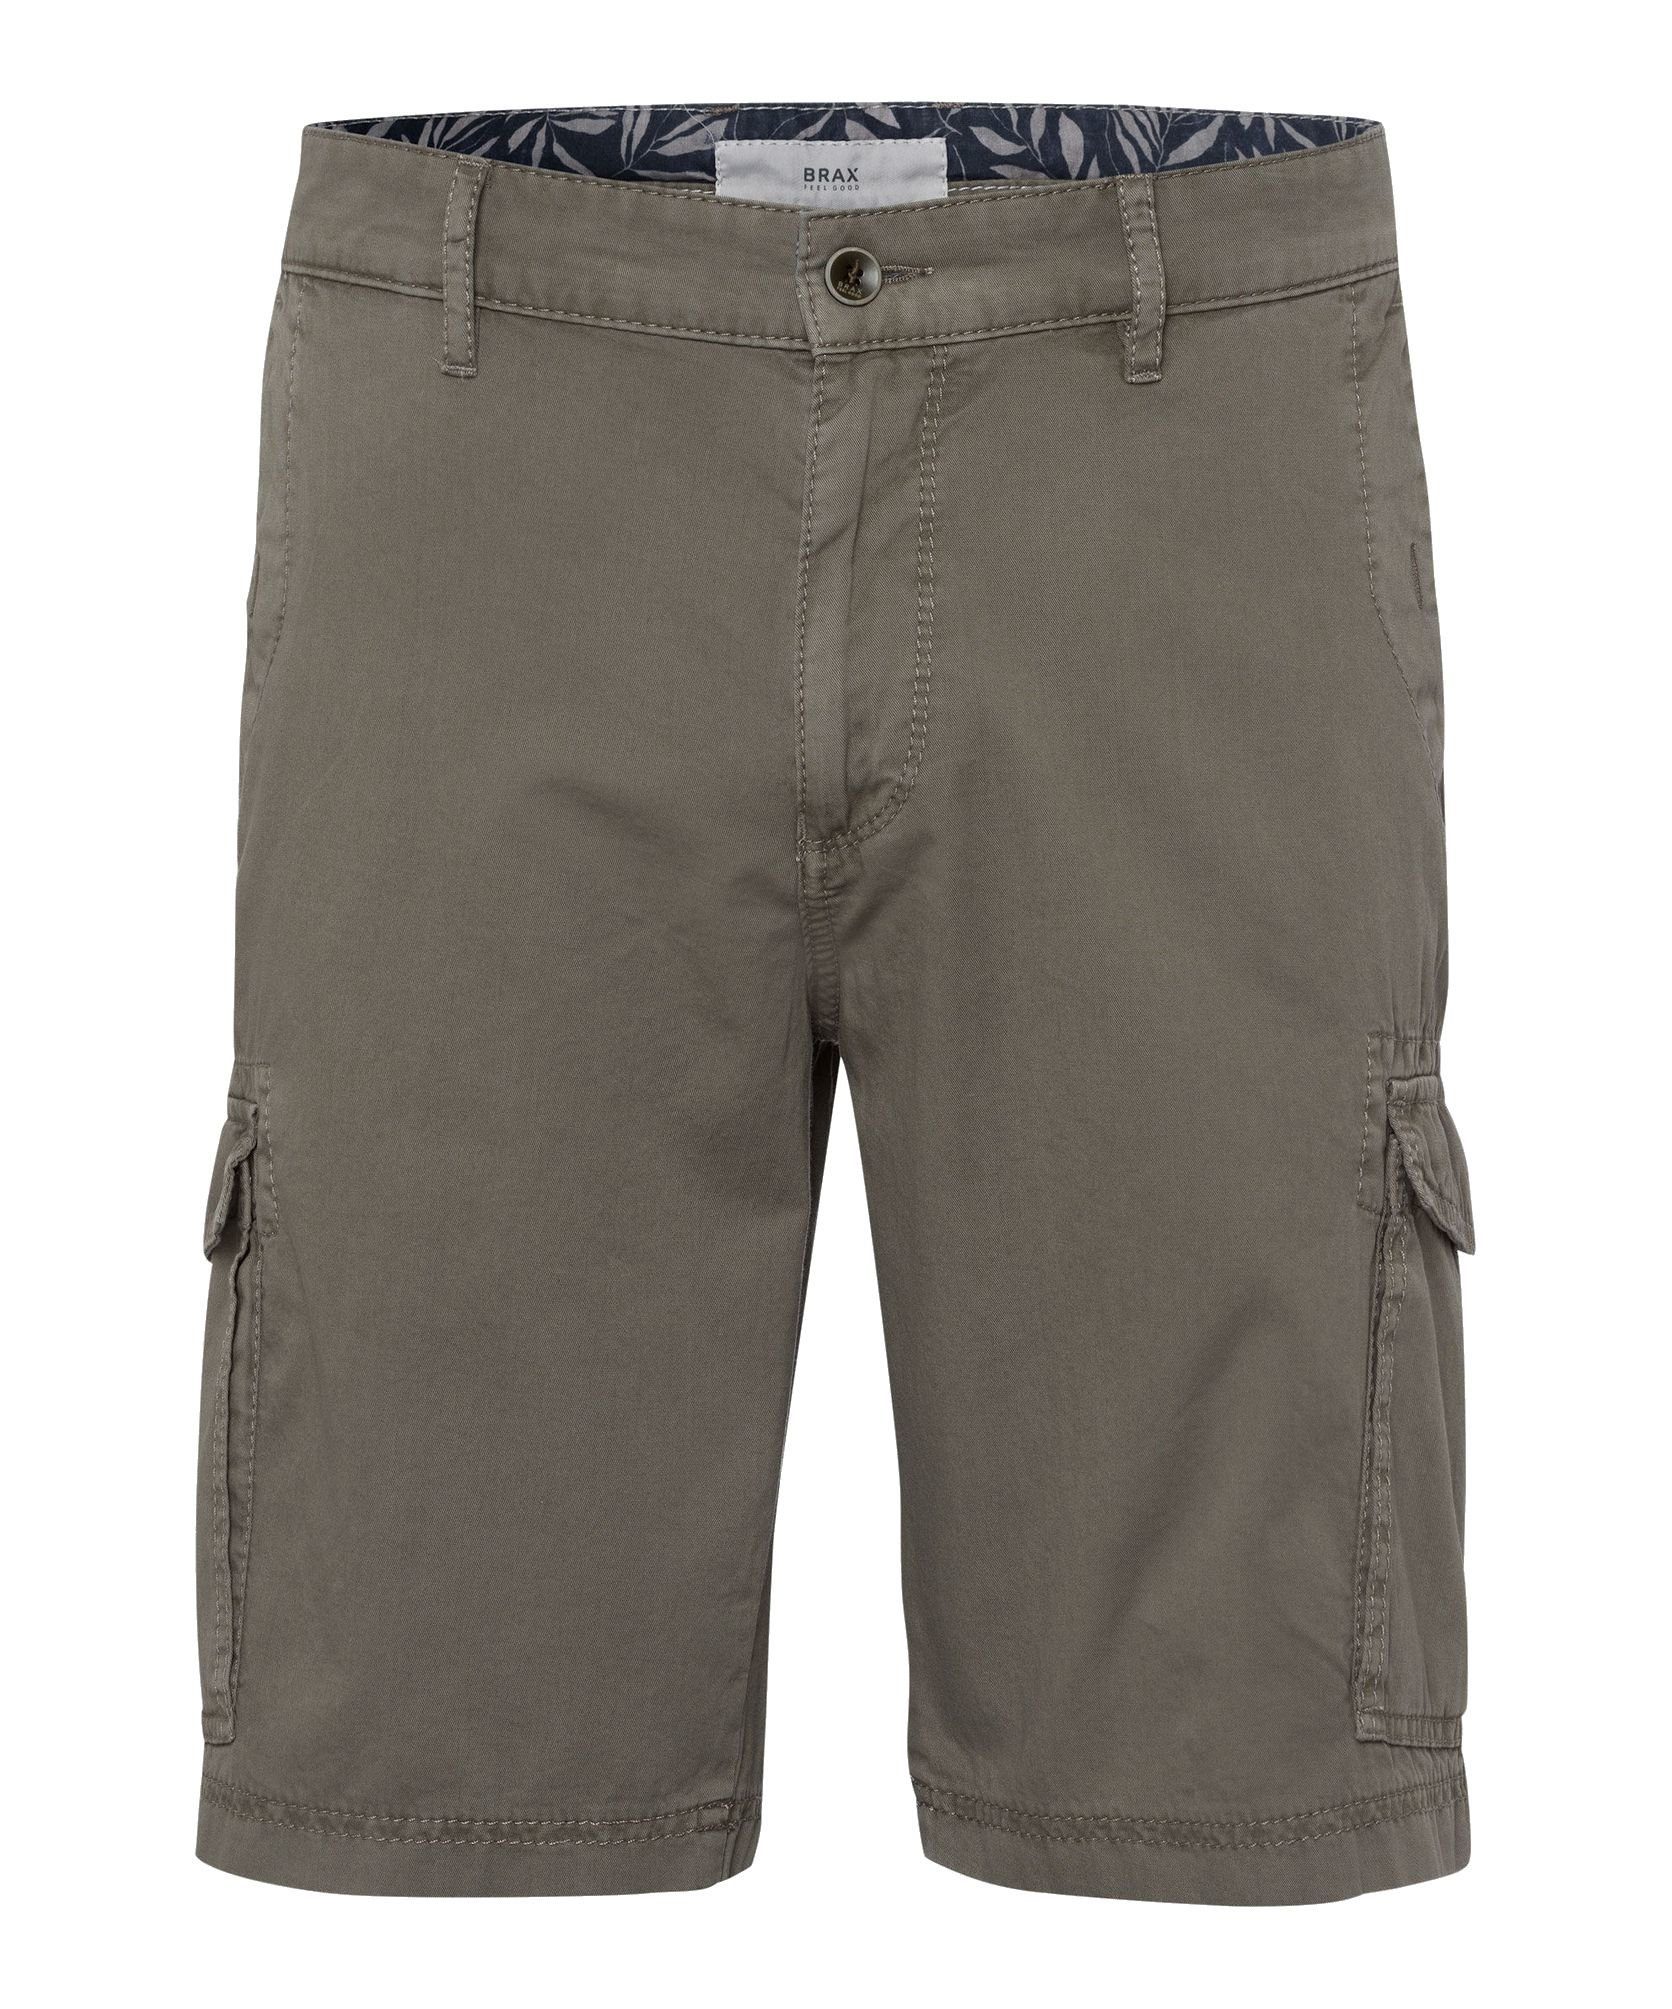 Brax Shorts Style Brazil (82-6858) Khaki (32)